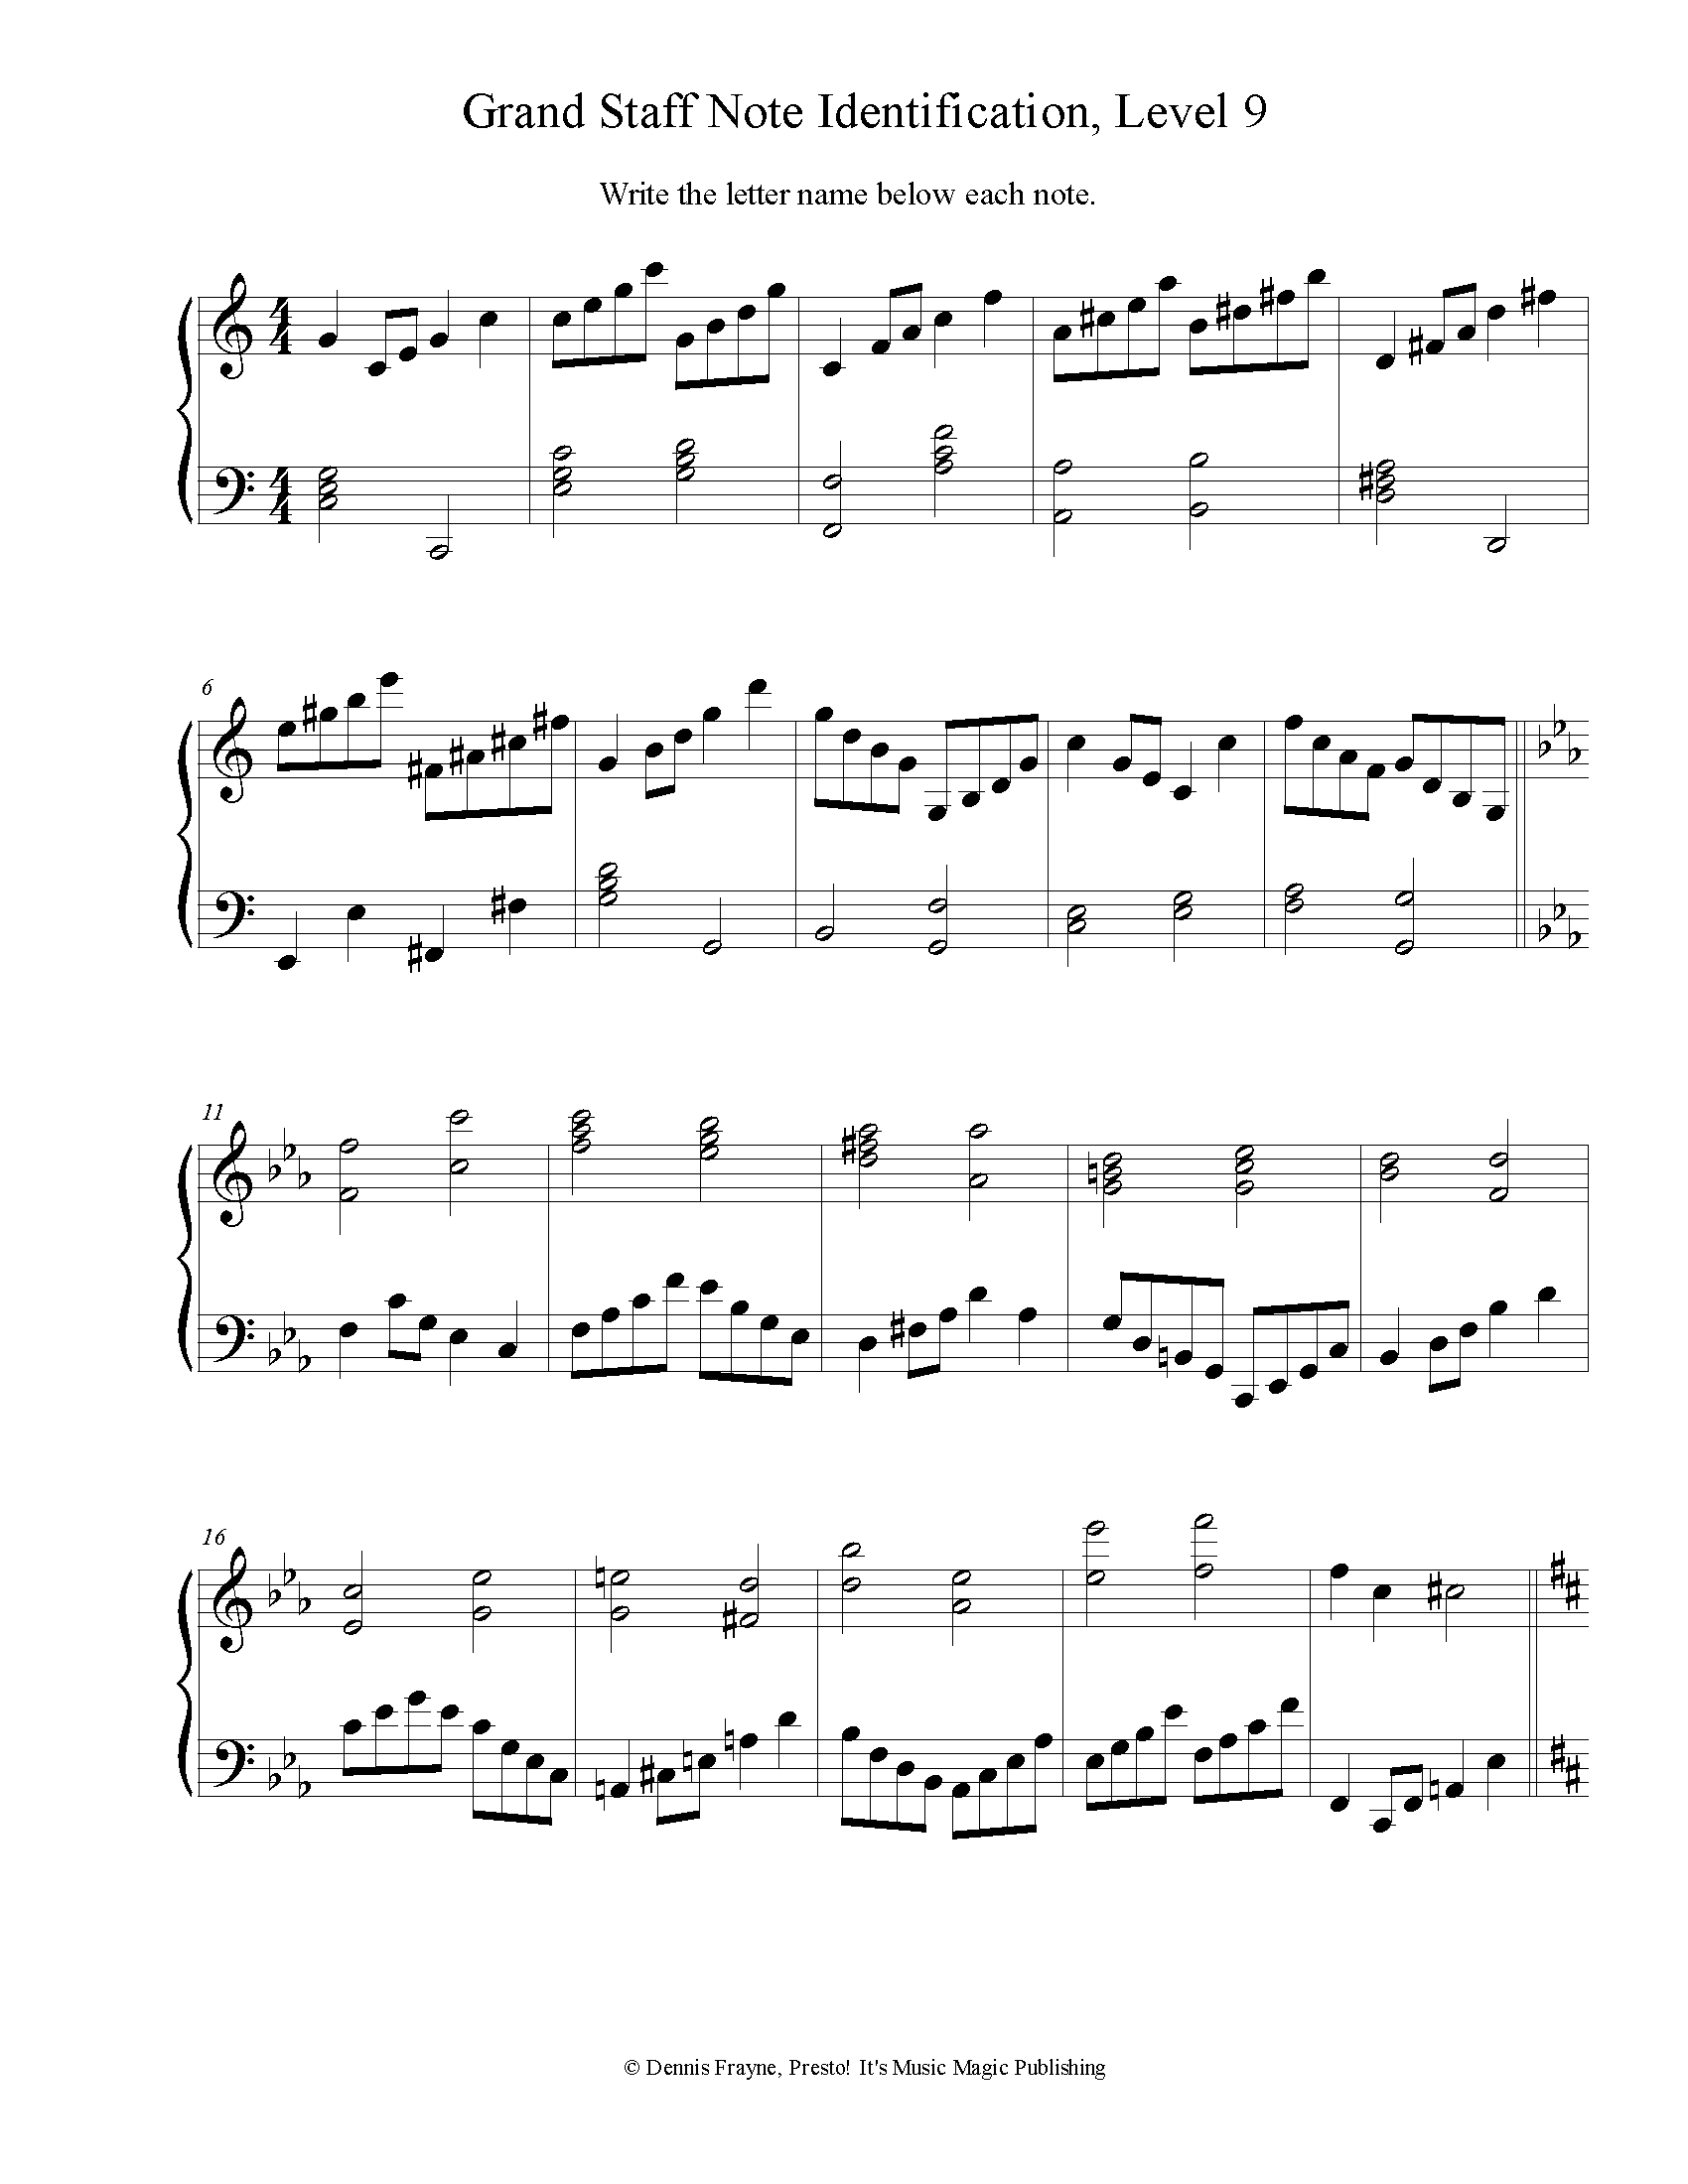 free-printable-music-note-naming-worksheets-presto-it-s-music-magic